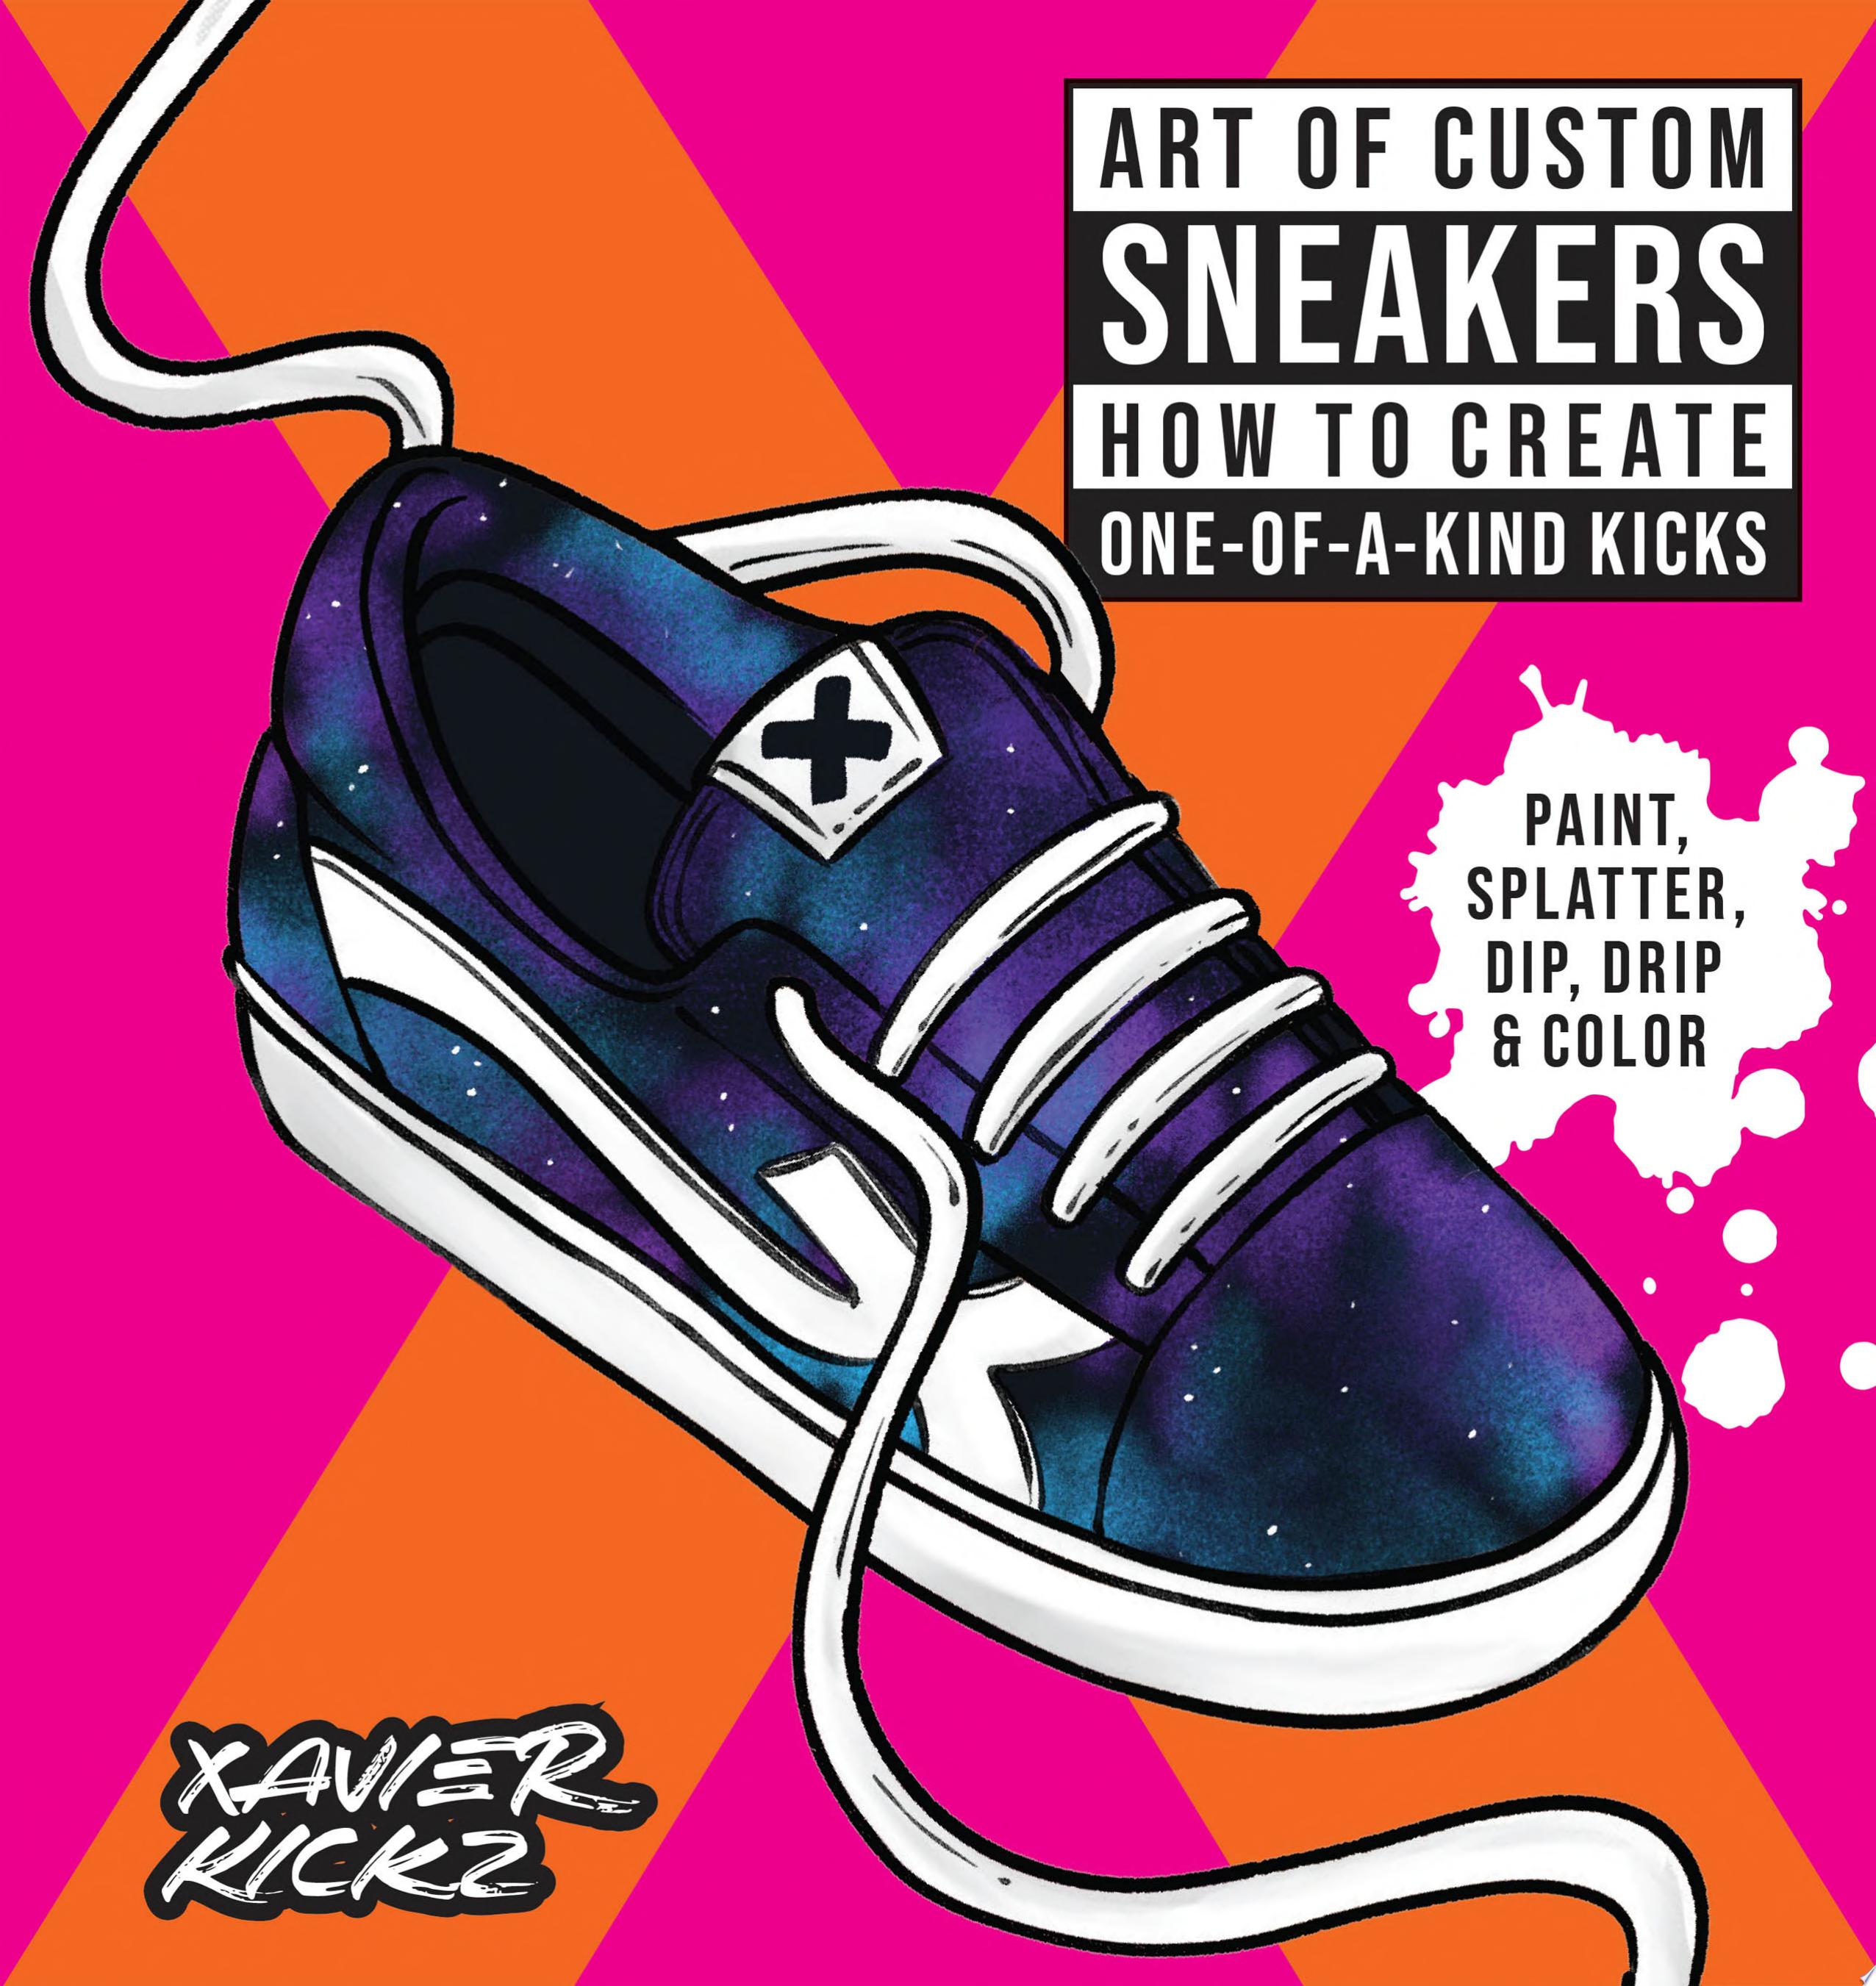 Image for "Art of Custom Sneakers"